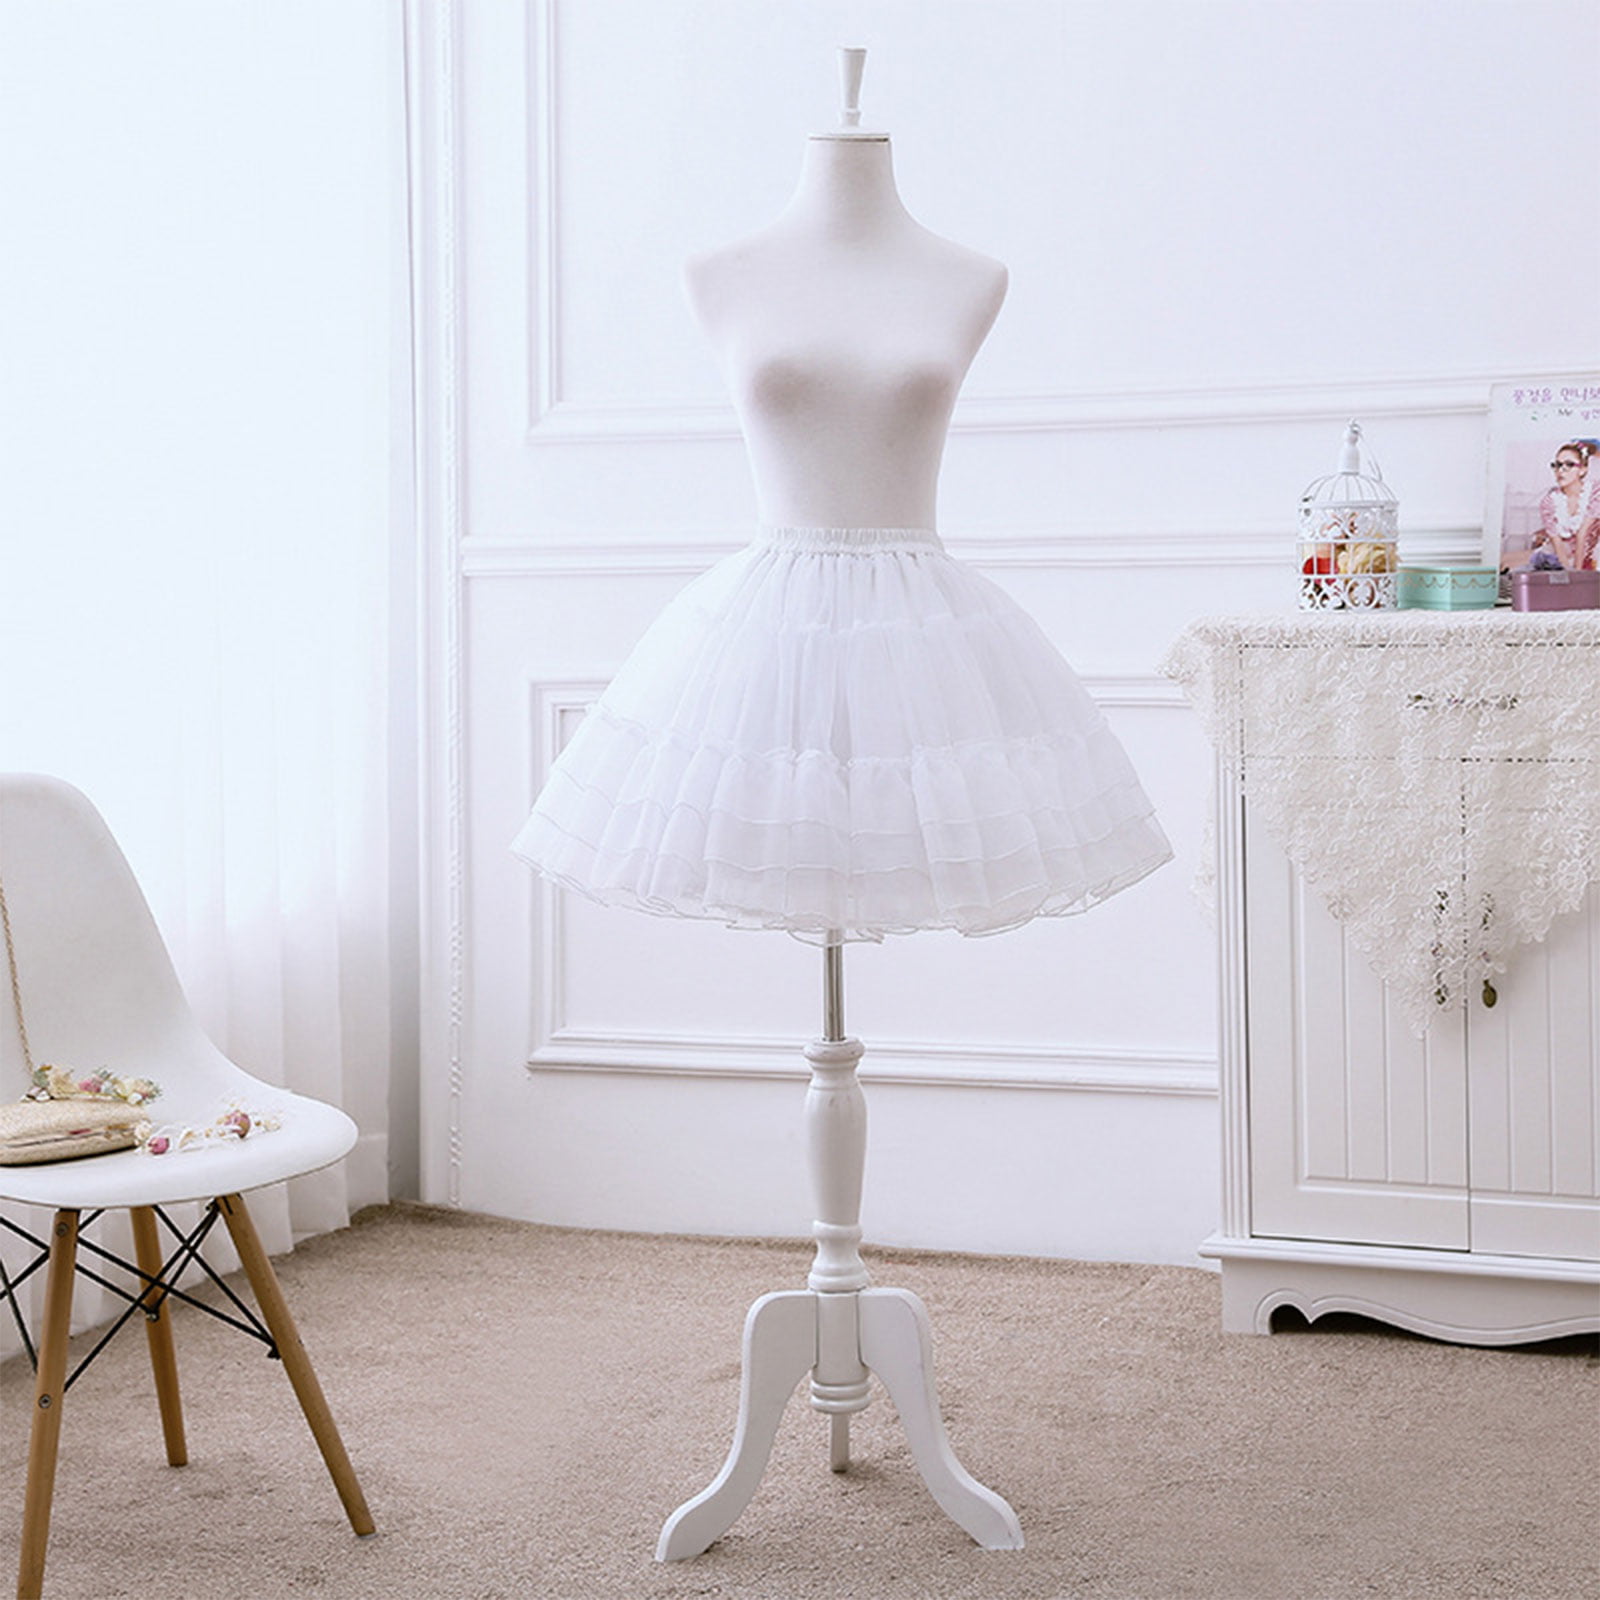 Buy ZLQQ Women's 4-Hoop A-Line Floor Length Ball Gown Petticoat Underskirt  Crinoline White at Amazon.in